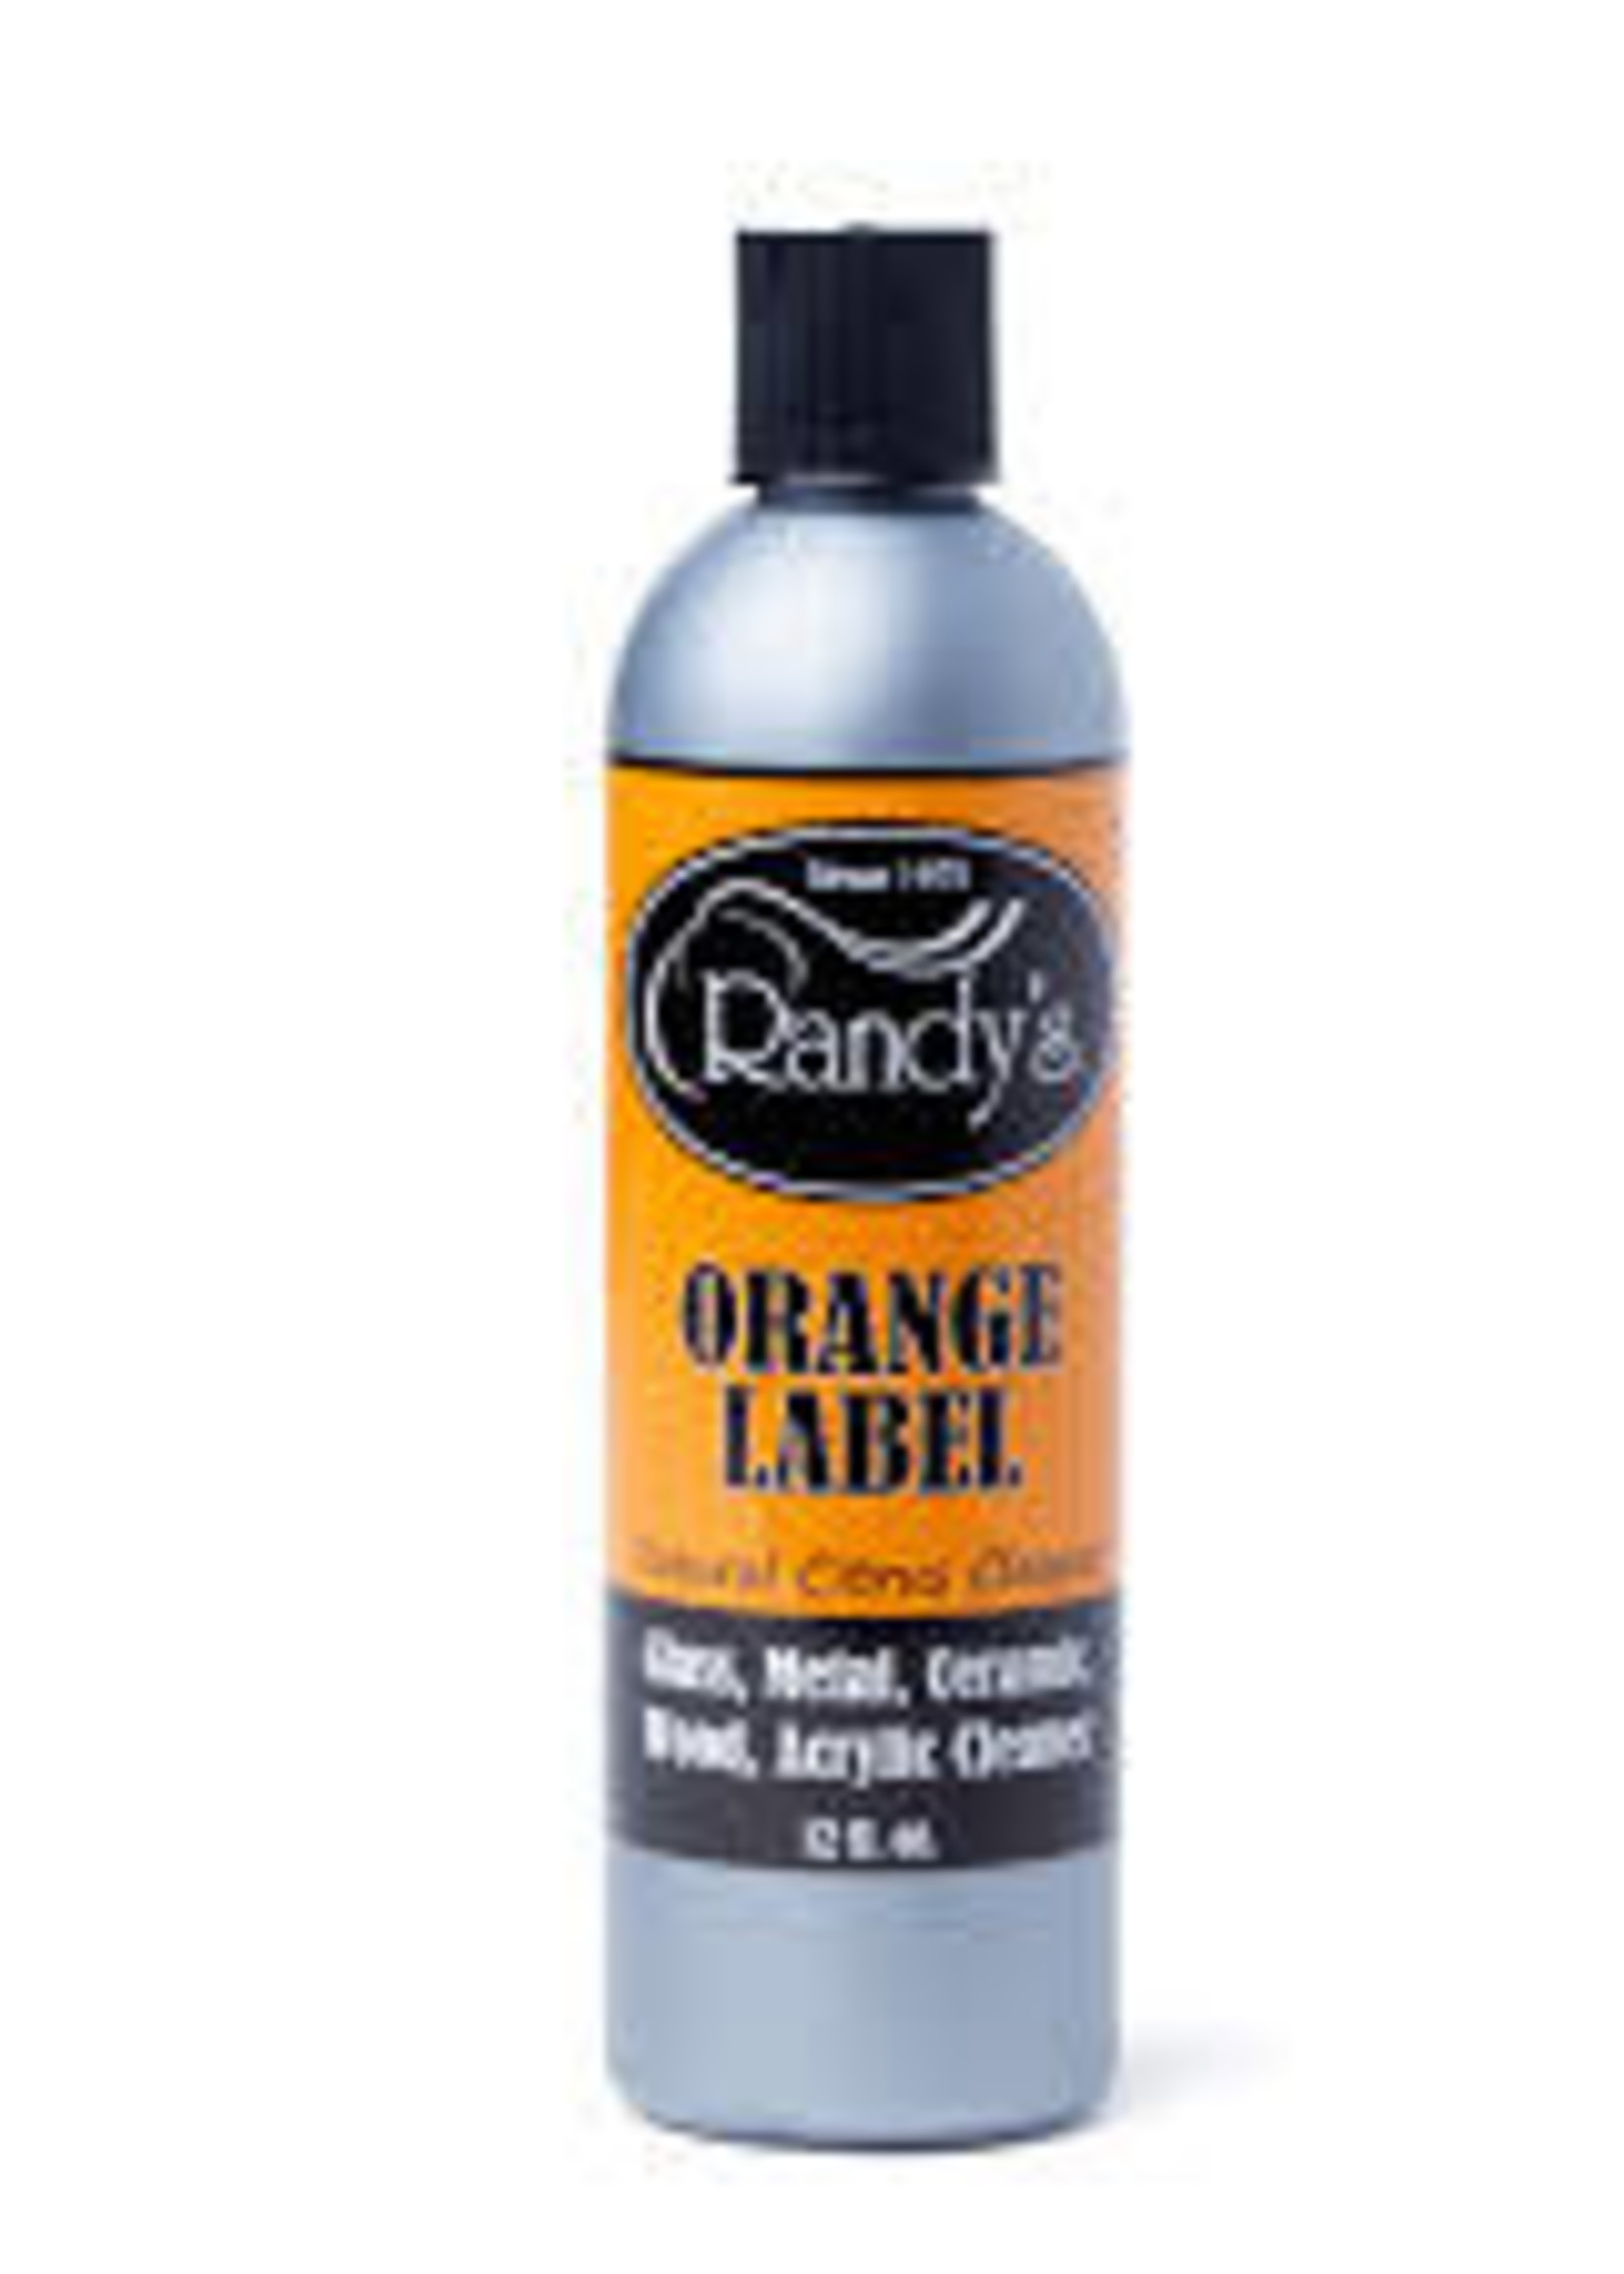 RANDYS Orange Label Cleaner